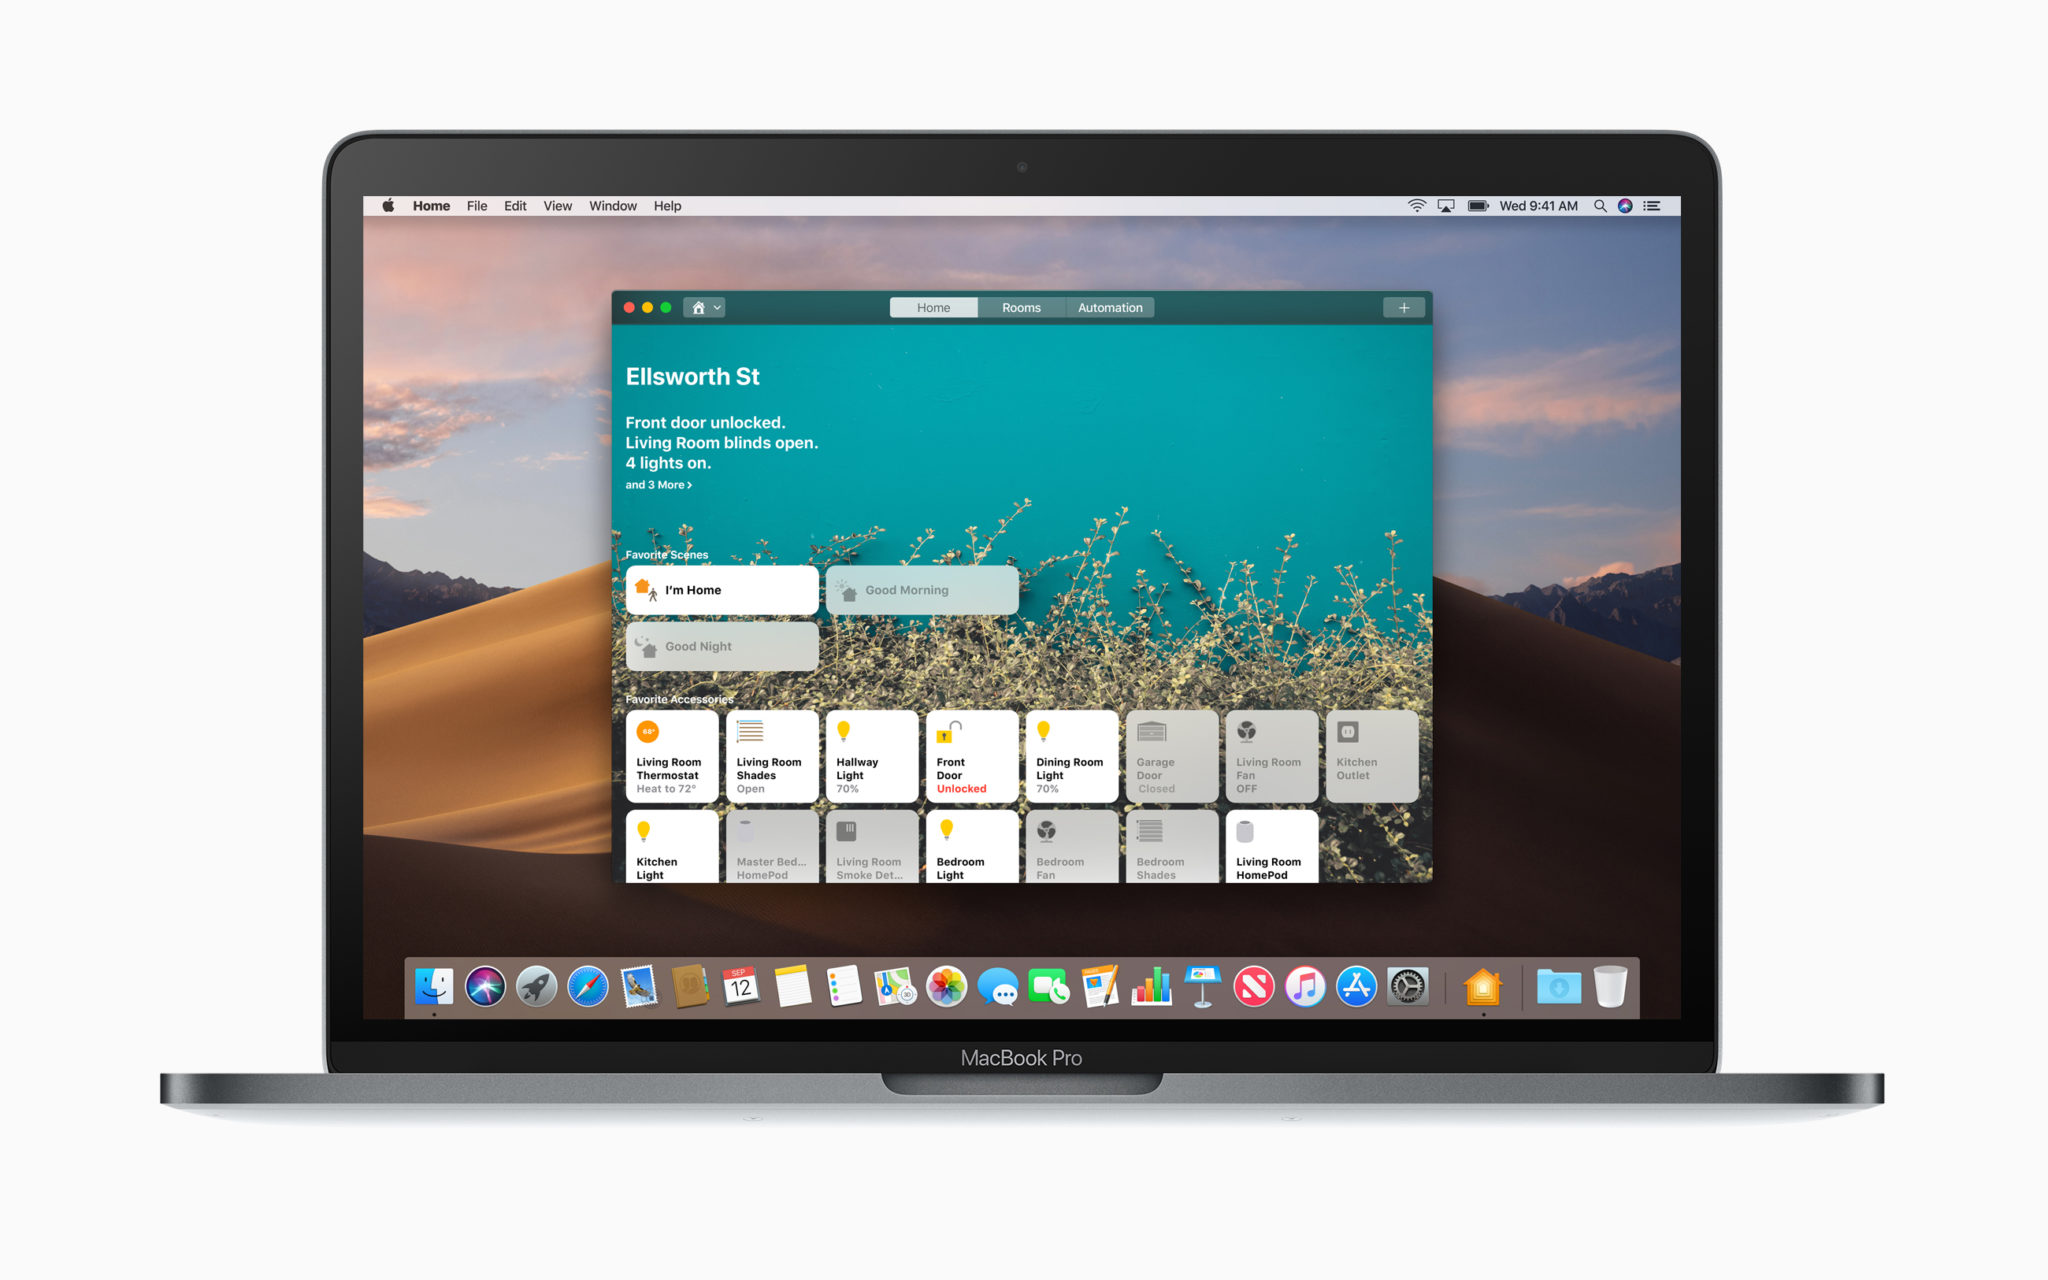 Apple MacBook Pro macOS Mojave Home screen 09242018